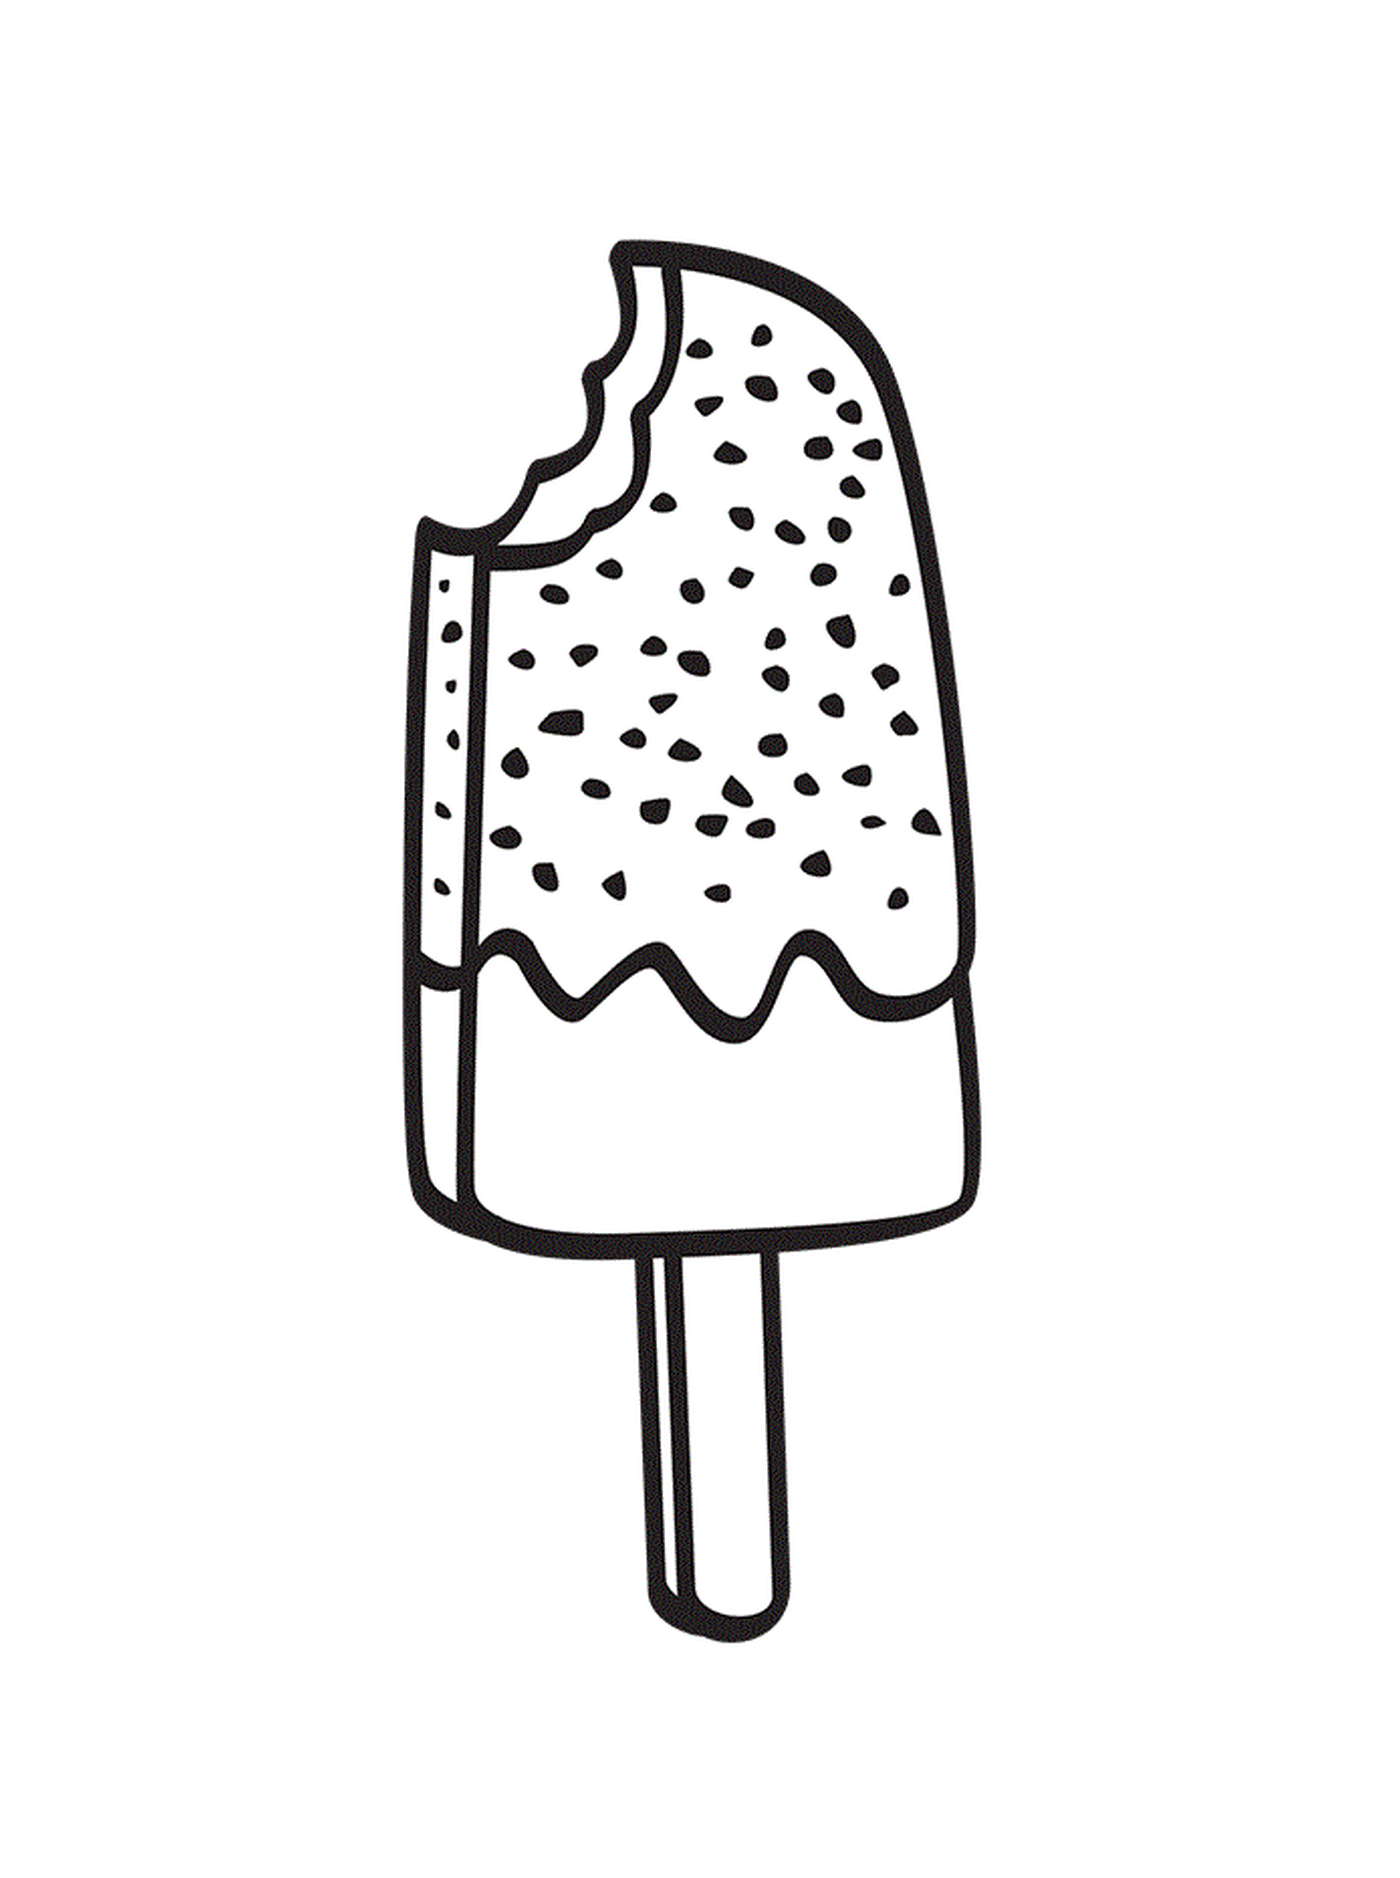  A creamy ice cream on a stick on summer vacation 